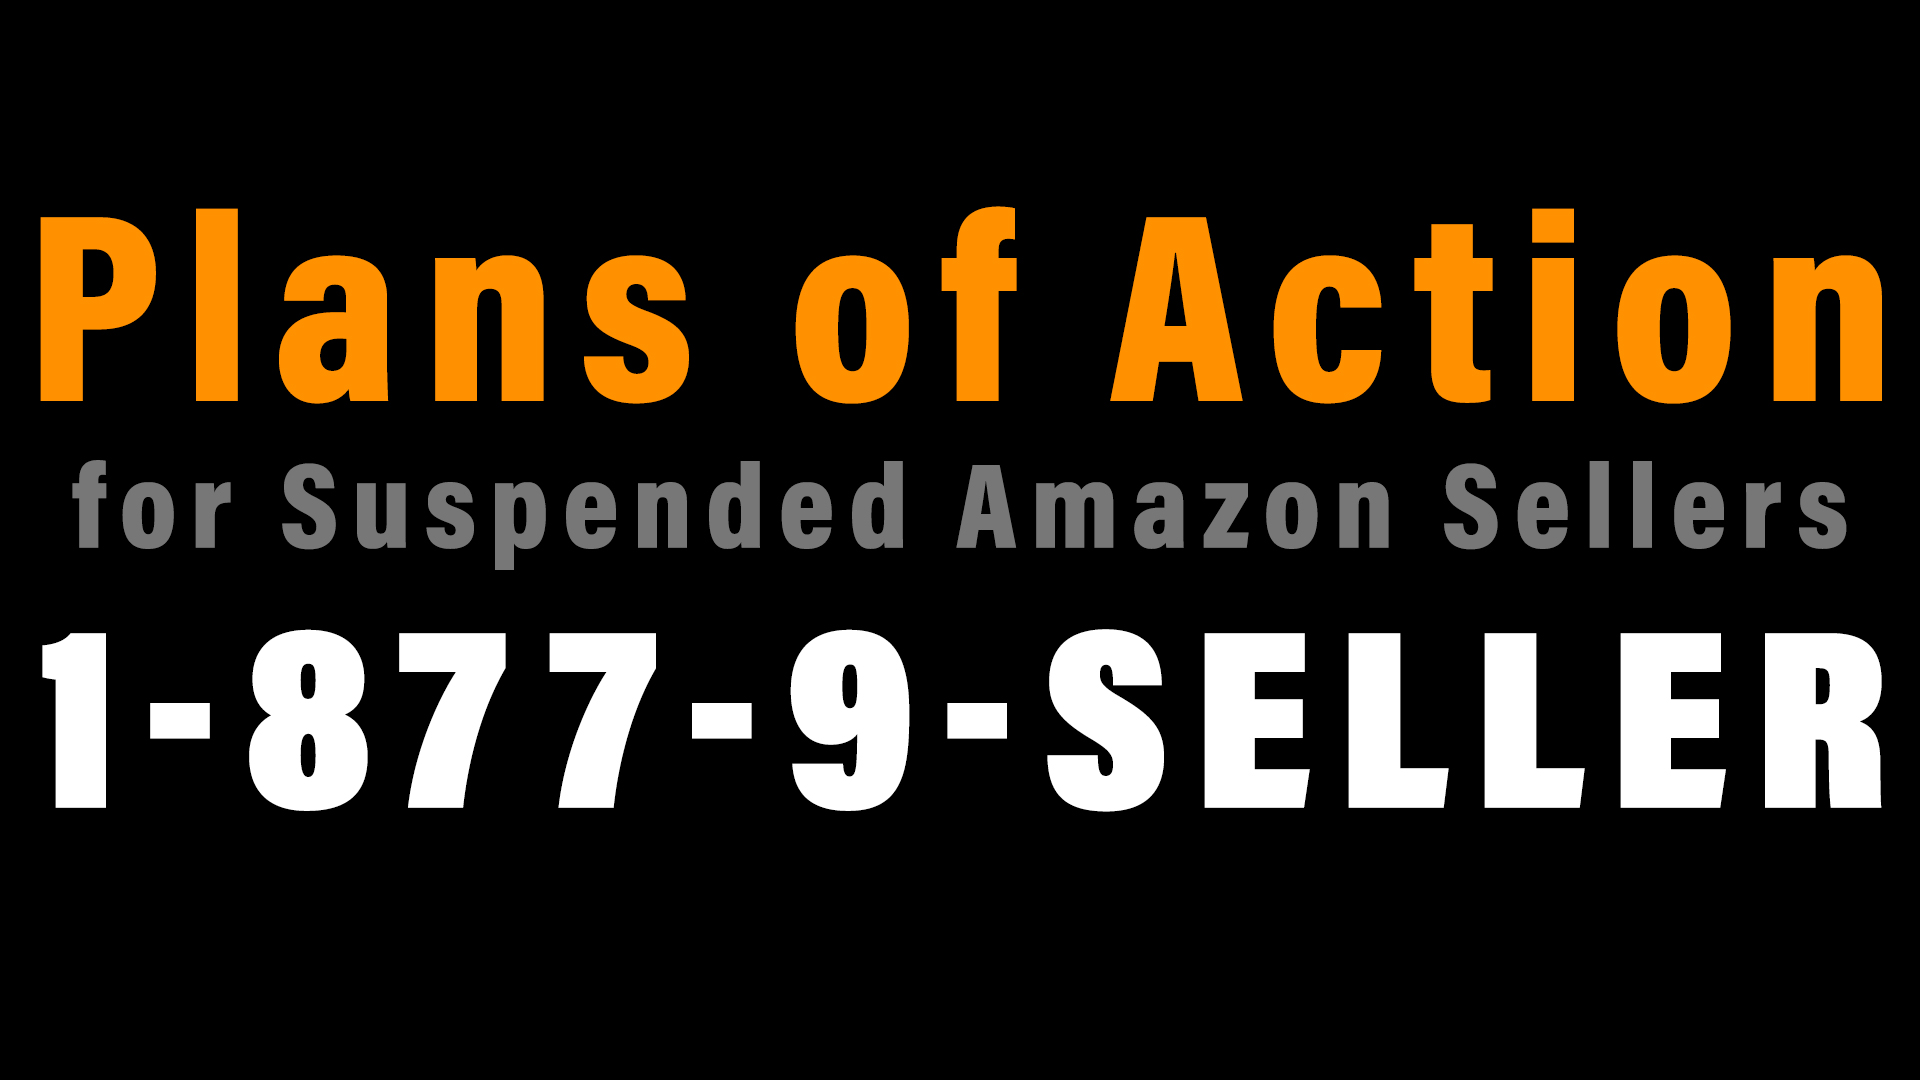 Amazon POA - Plans of Action for Amazon